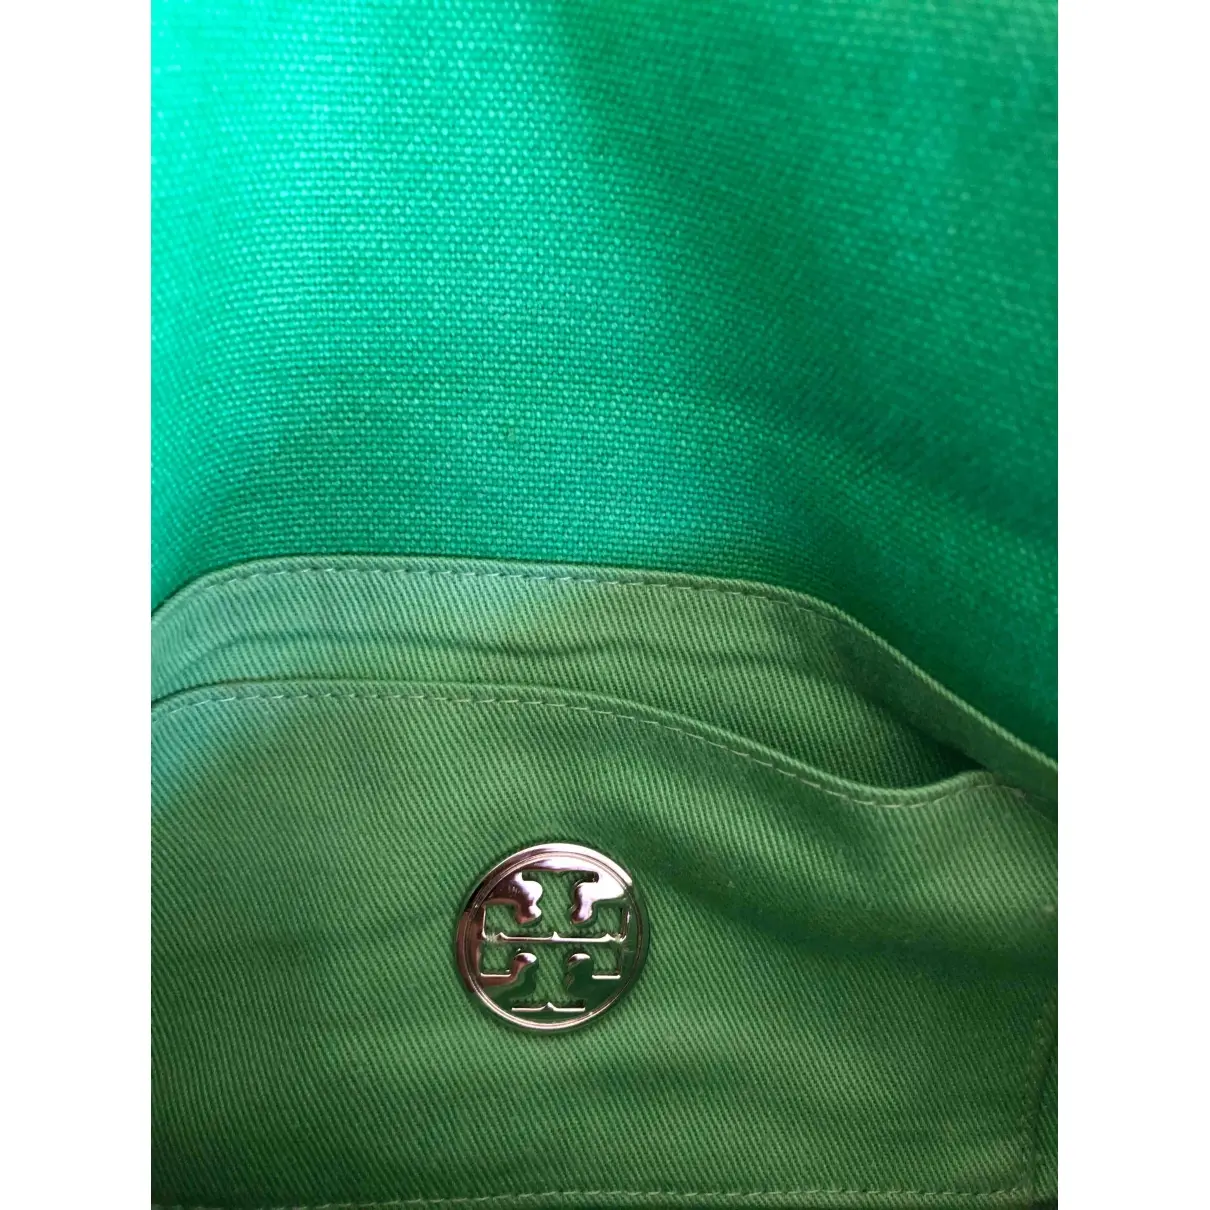 Buy Tory Burch Cloth clutch bag online